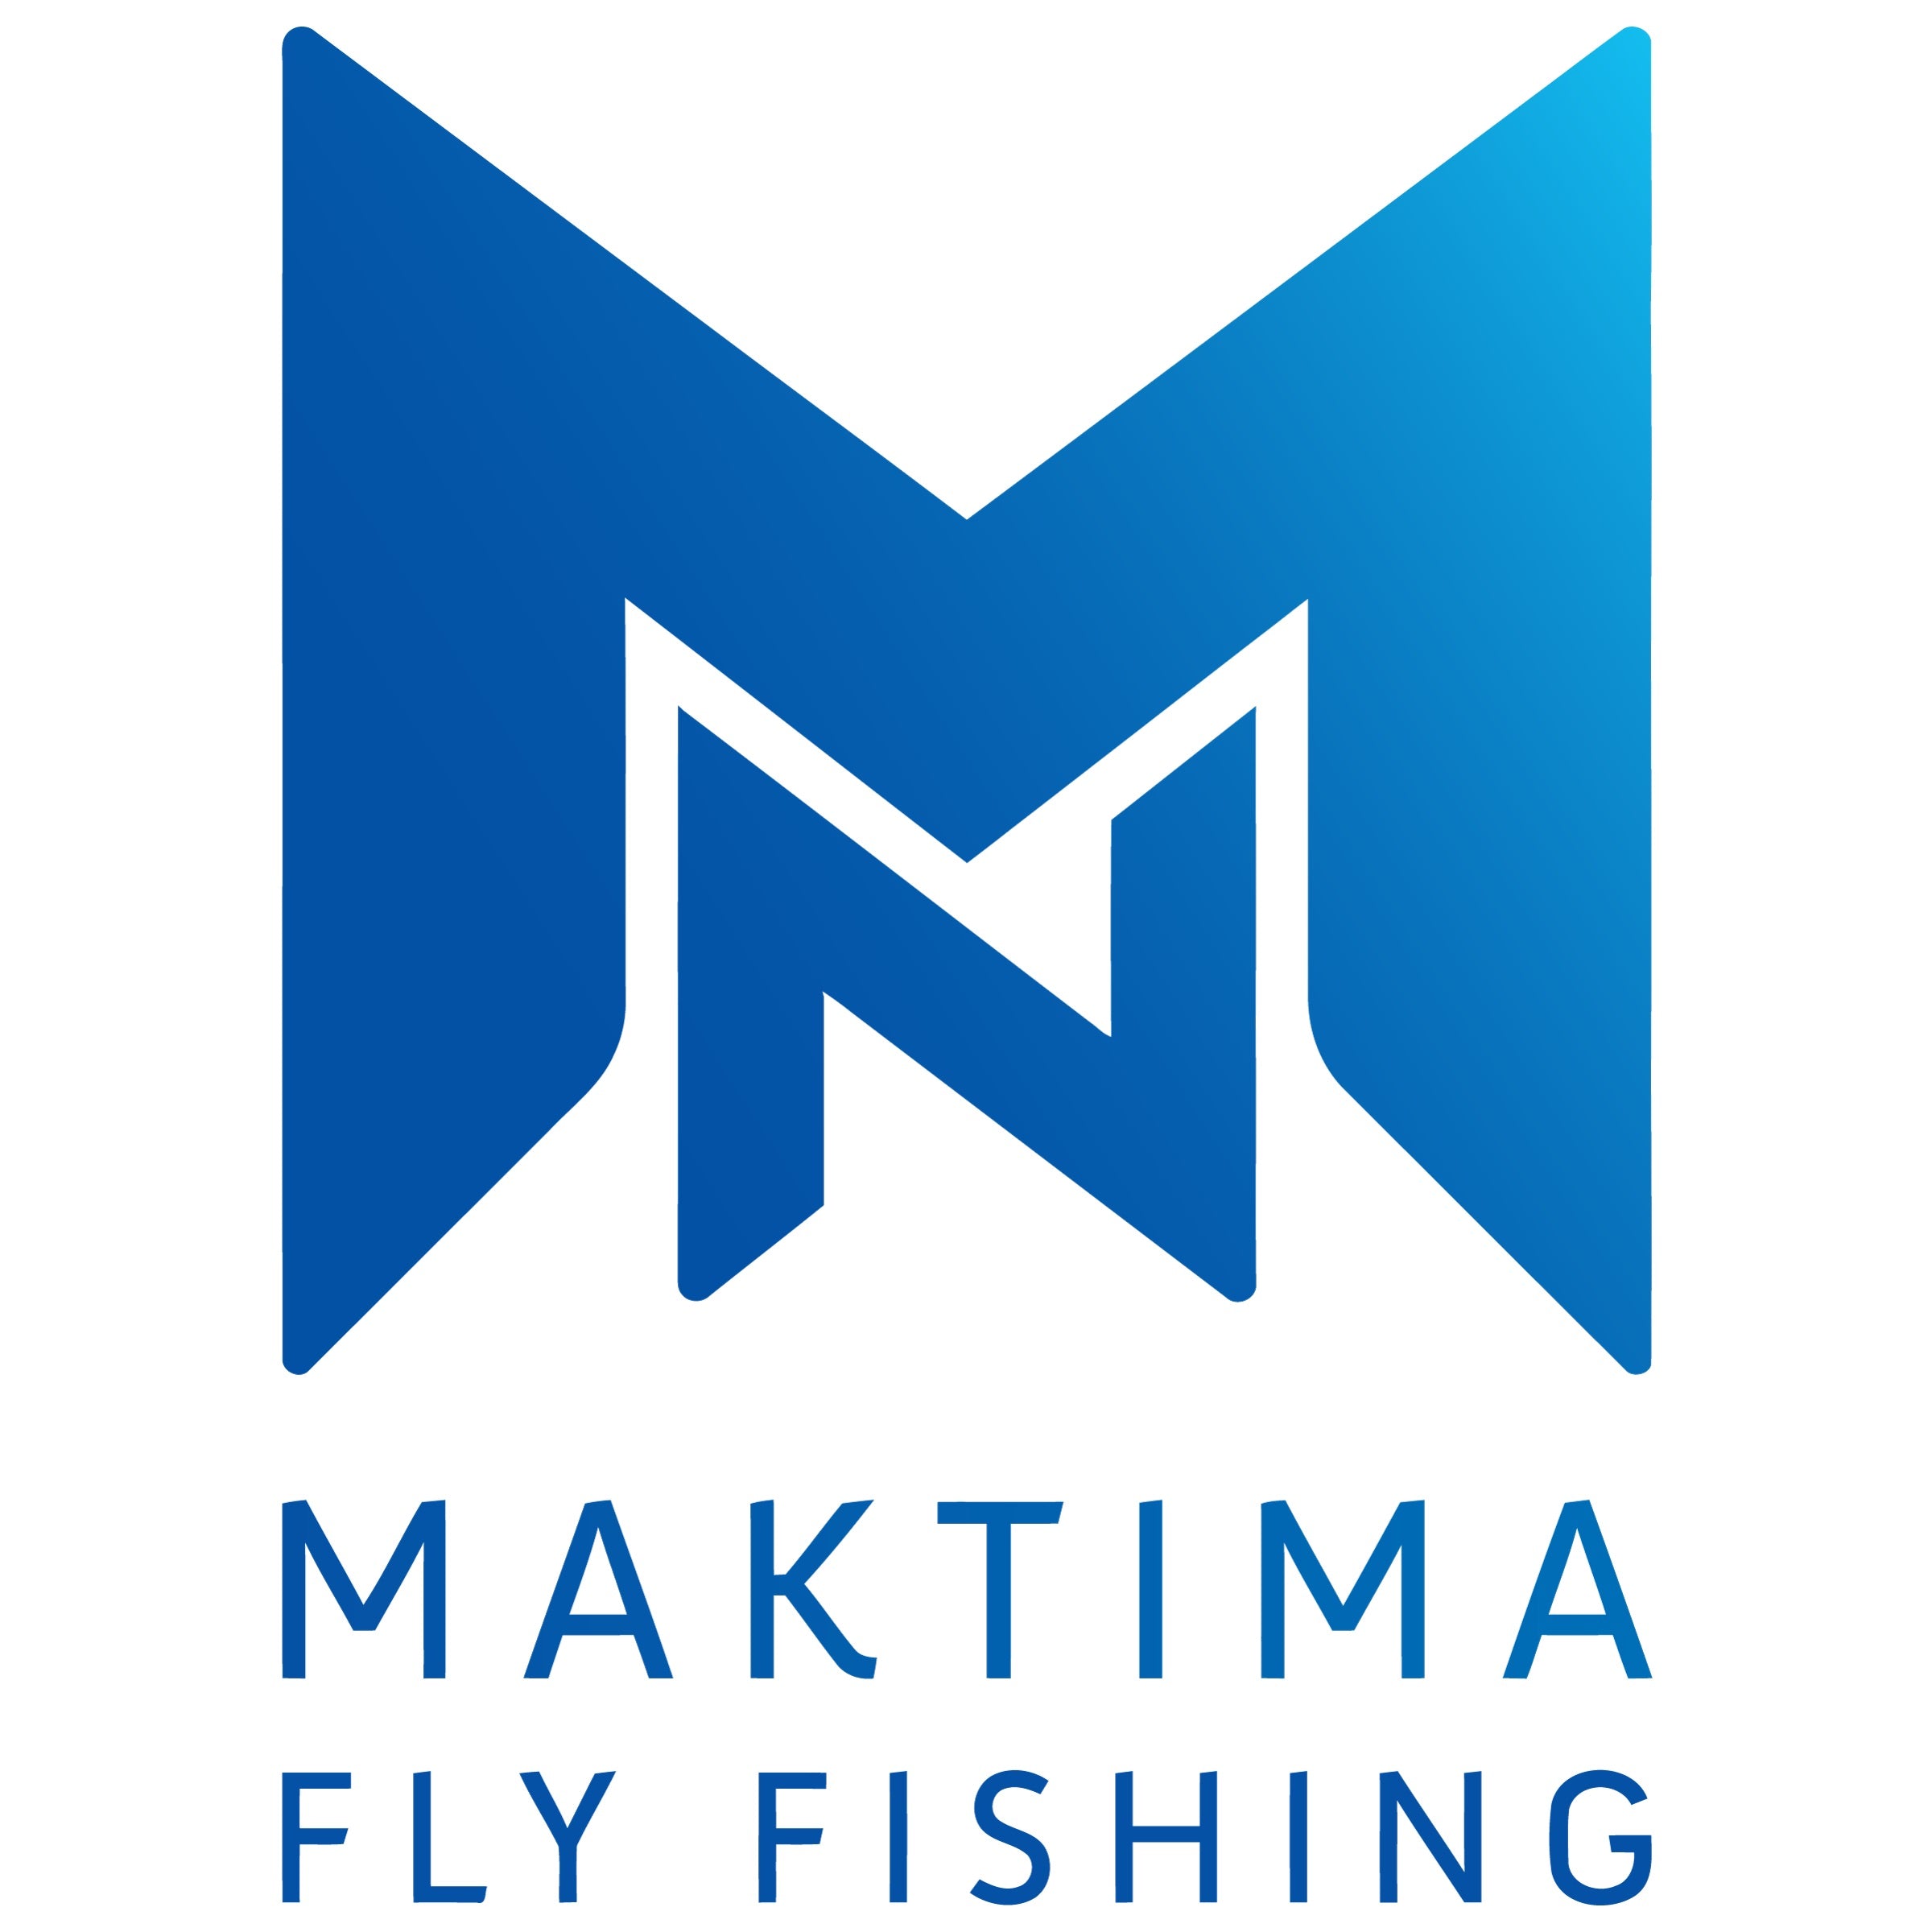 NMaktima Fly Fishing website Launch – nmaktimaflyfishing